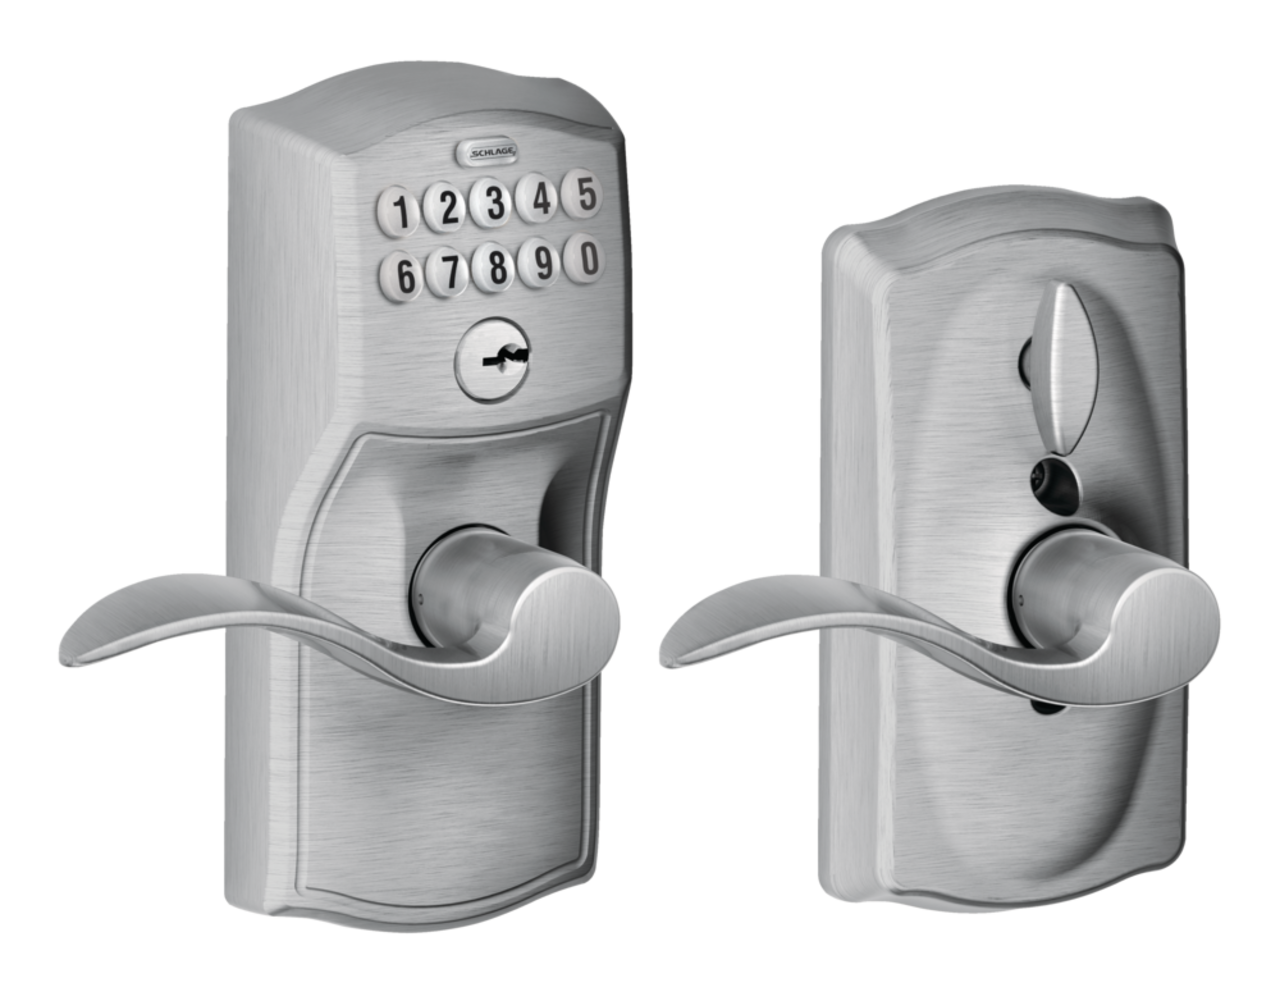 Schlage Electronic Keypad Deadbolt Door Lock with Lever, Satin Nickel